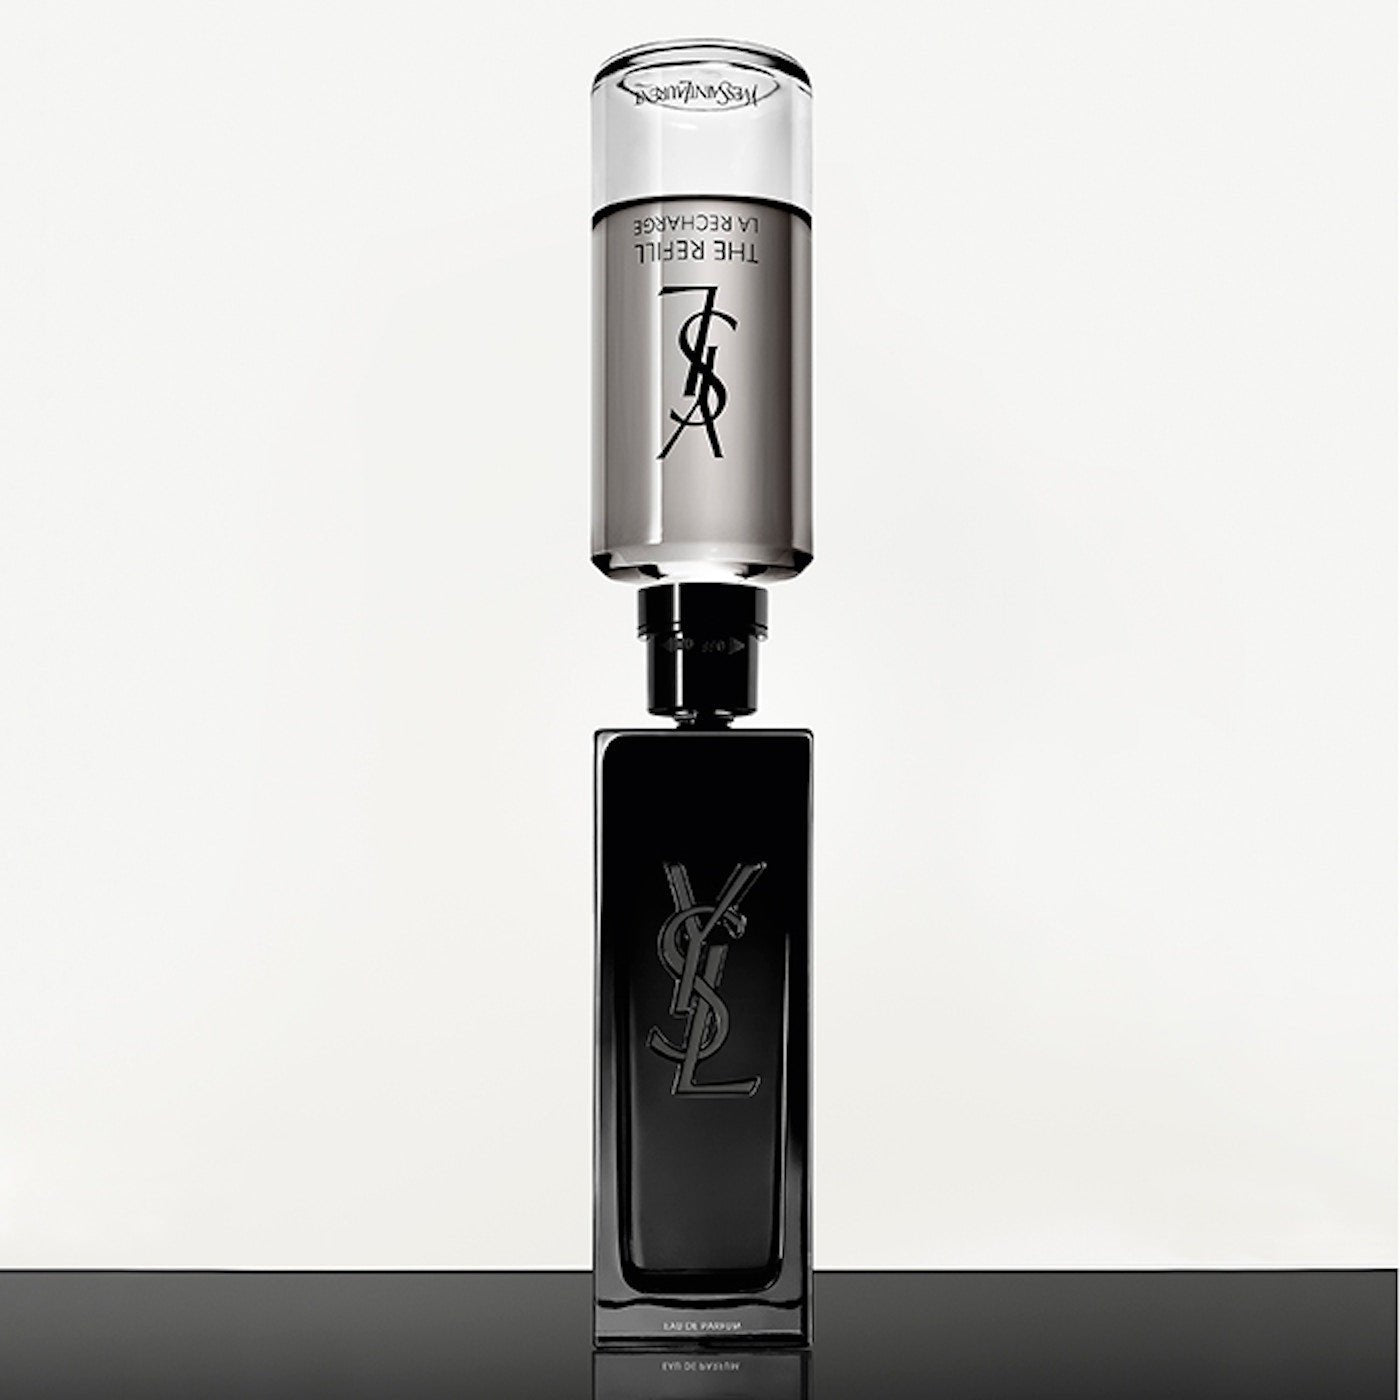 Yves Saint Laurent MYSLF EDP | My Perfume Shop Australia